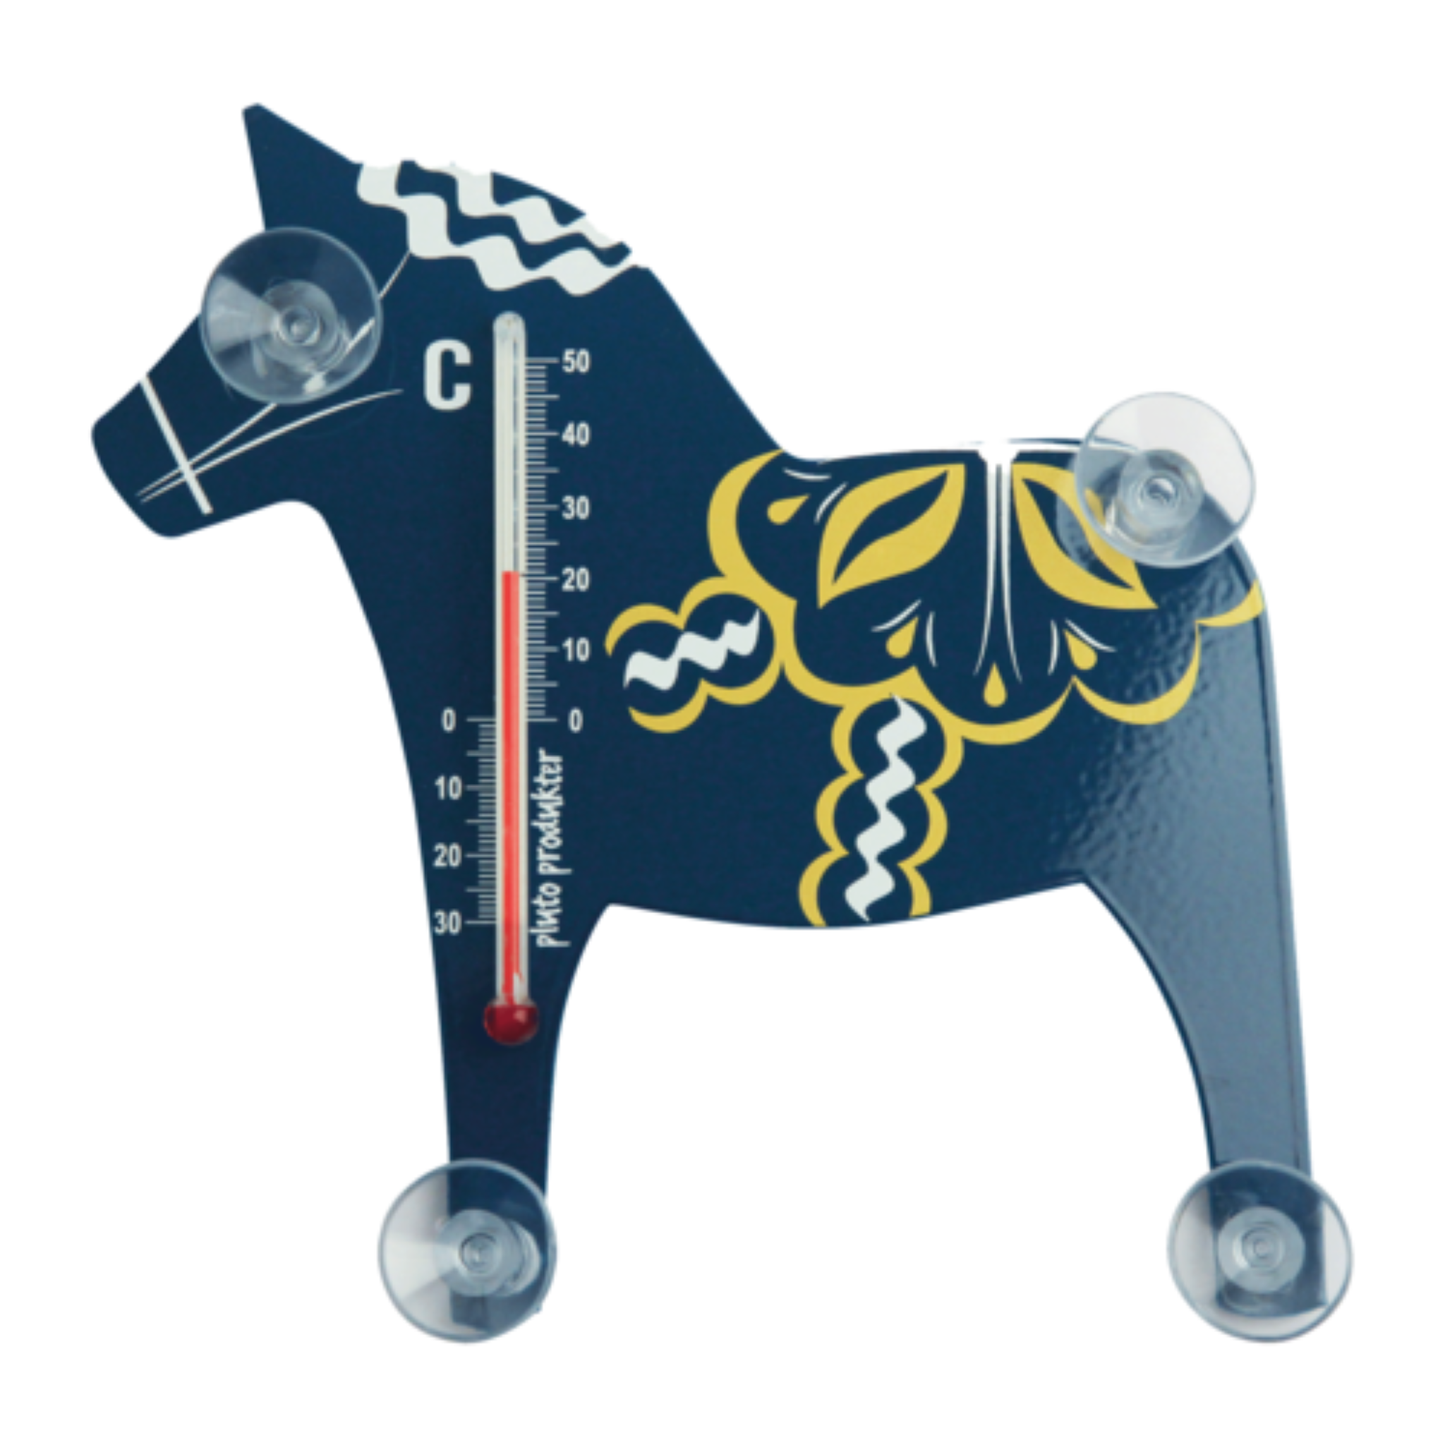 Dala Horse Thermometer